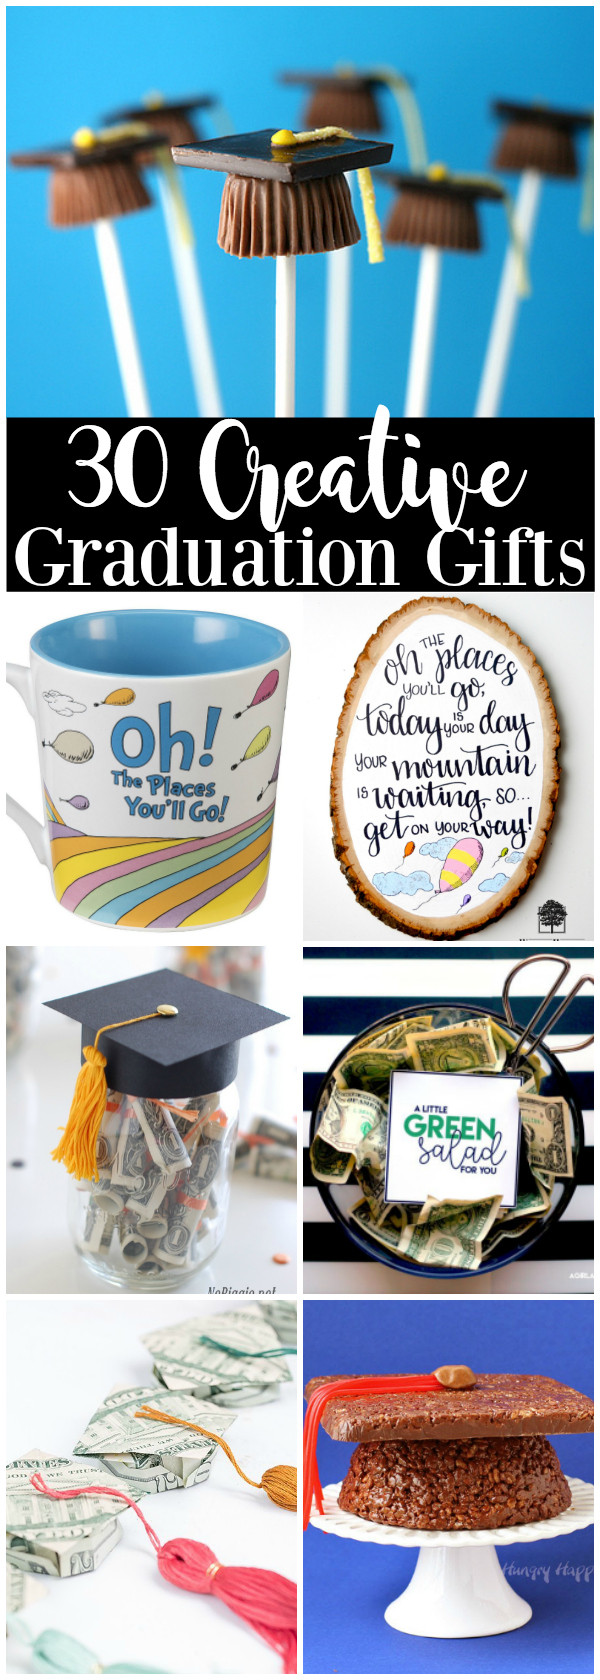 Graduation Gift Ideas Pinterest
 30 Creative Graduation Gift Ideas